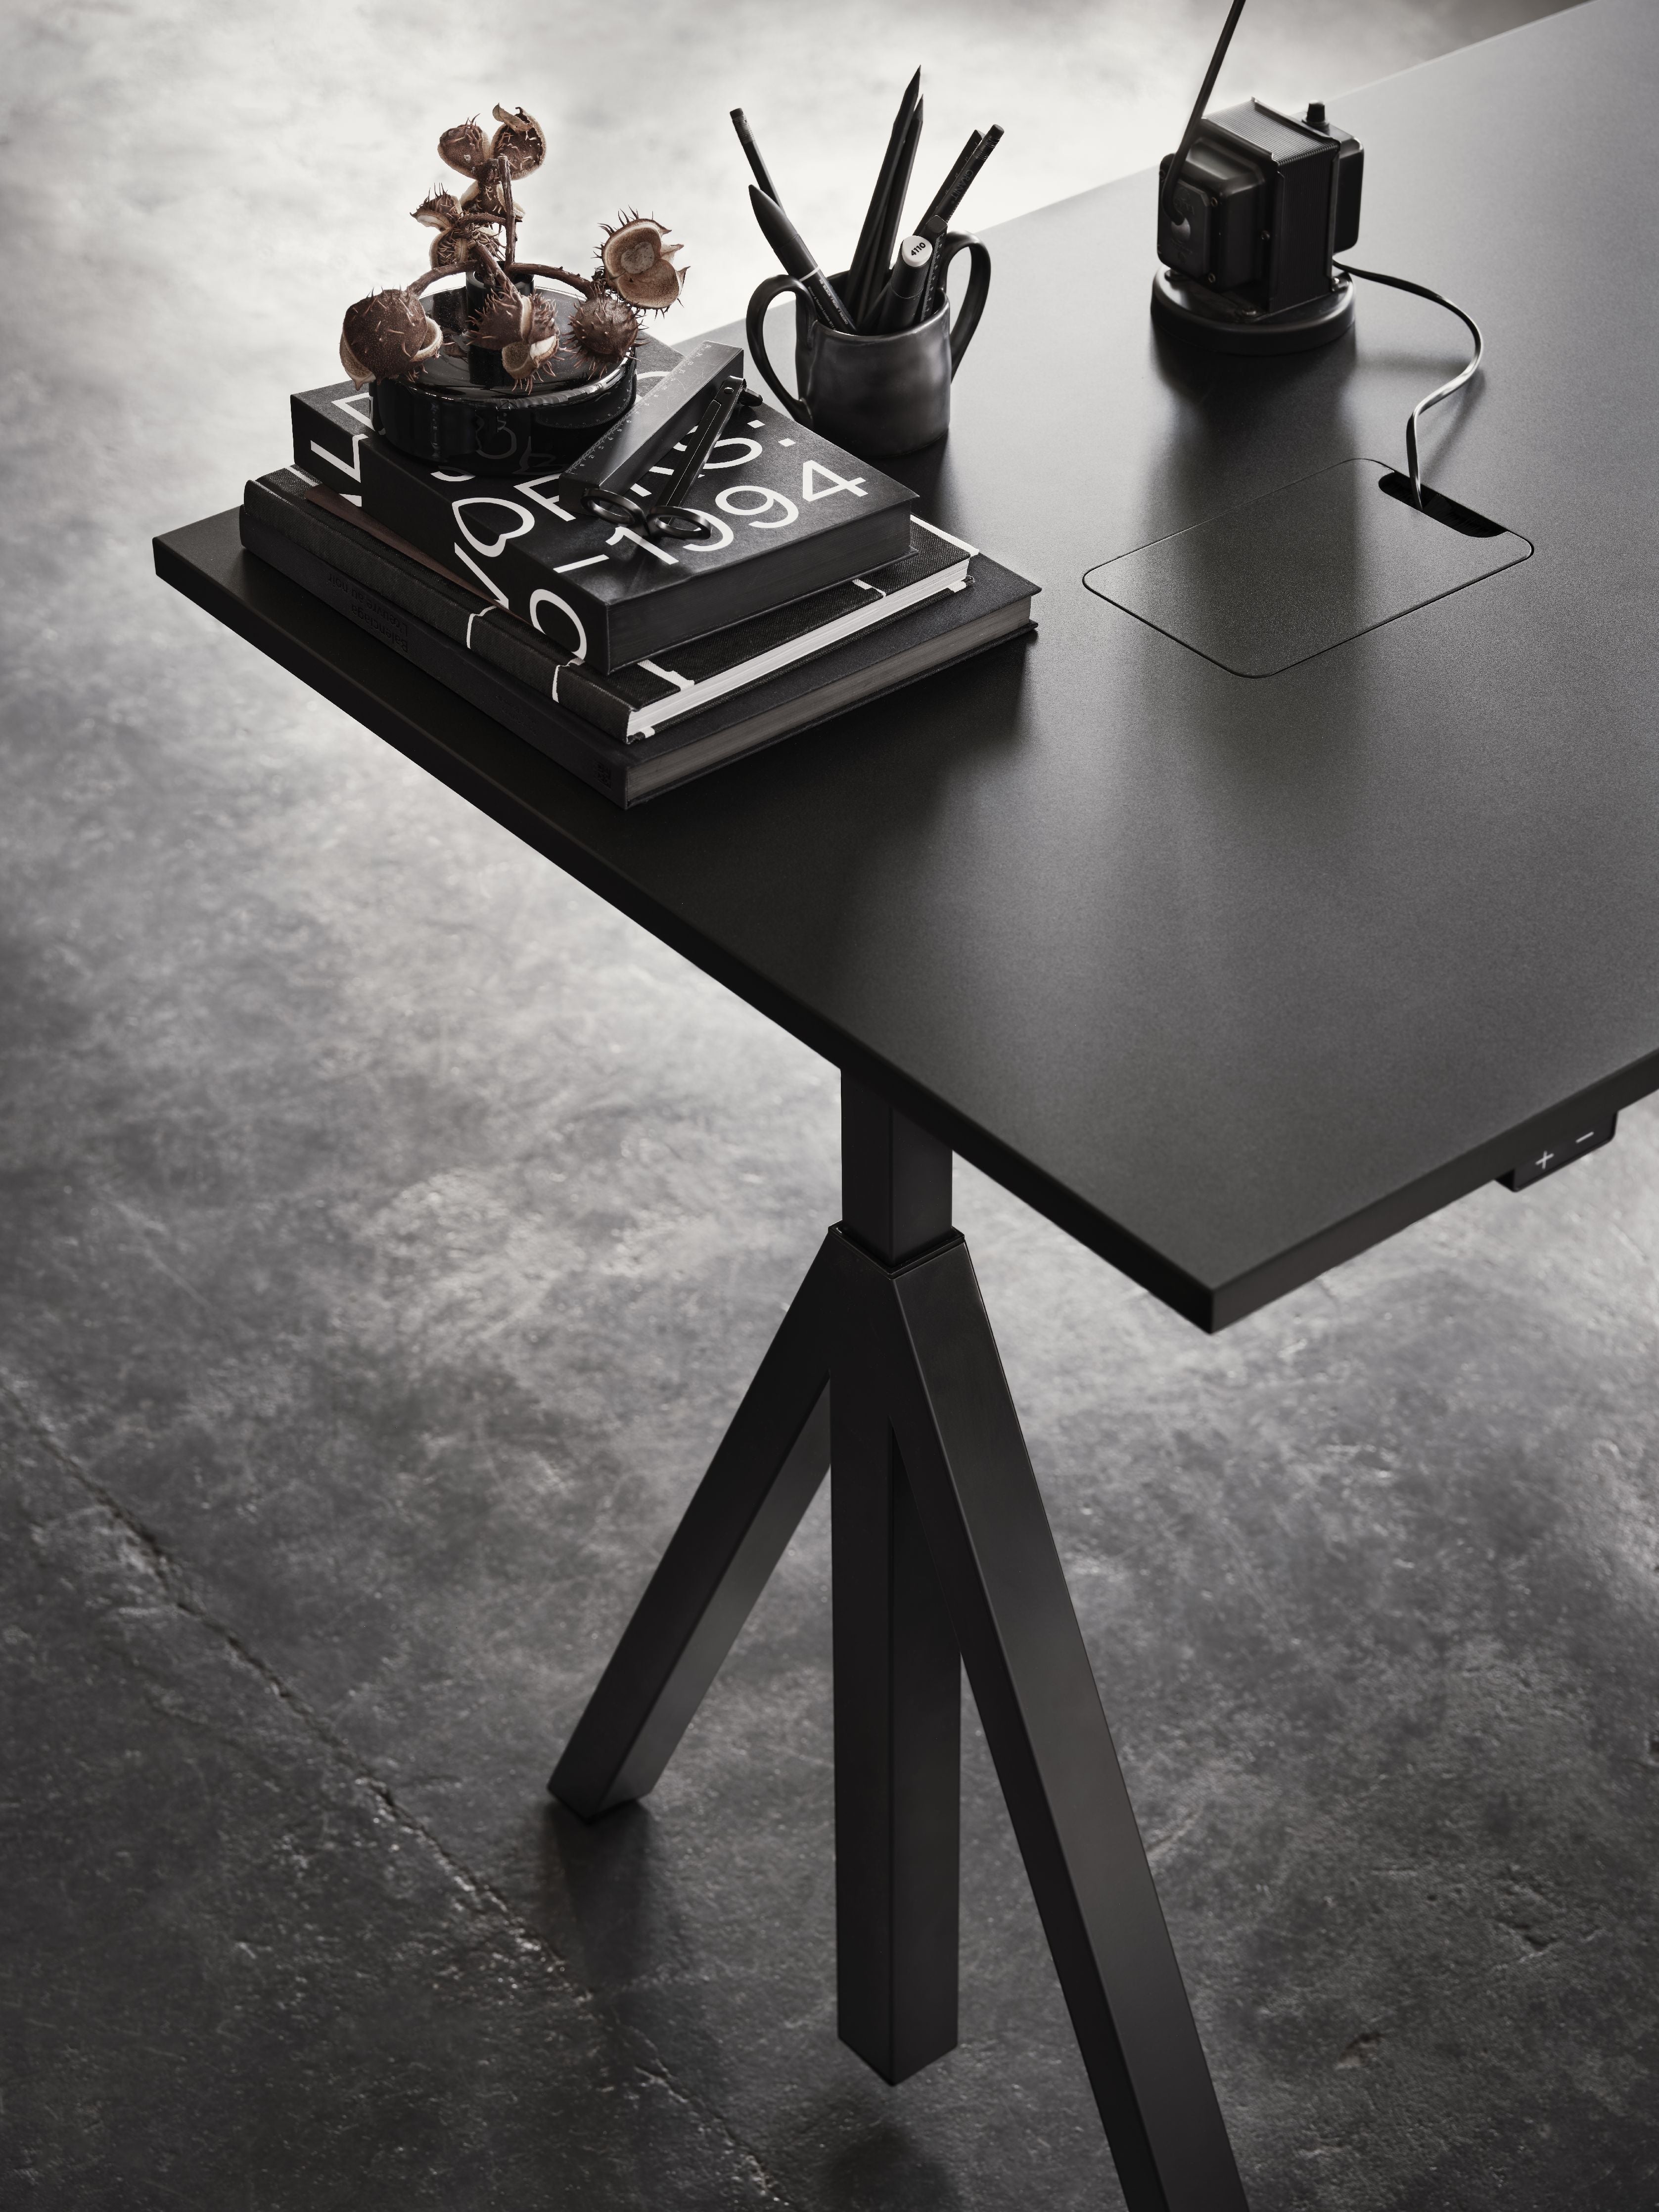 String Furniture Fungerar skrivbordet 90x180 cm, ek/svart